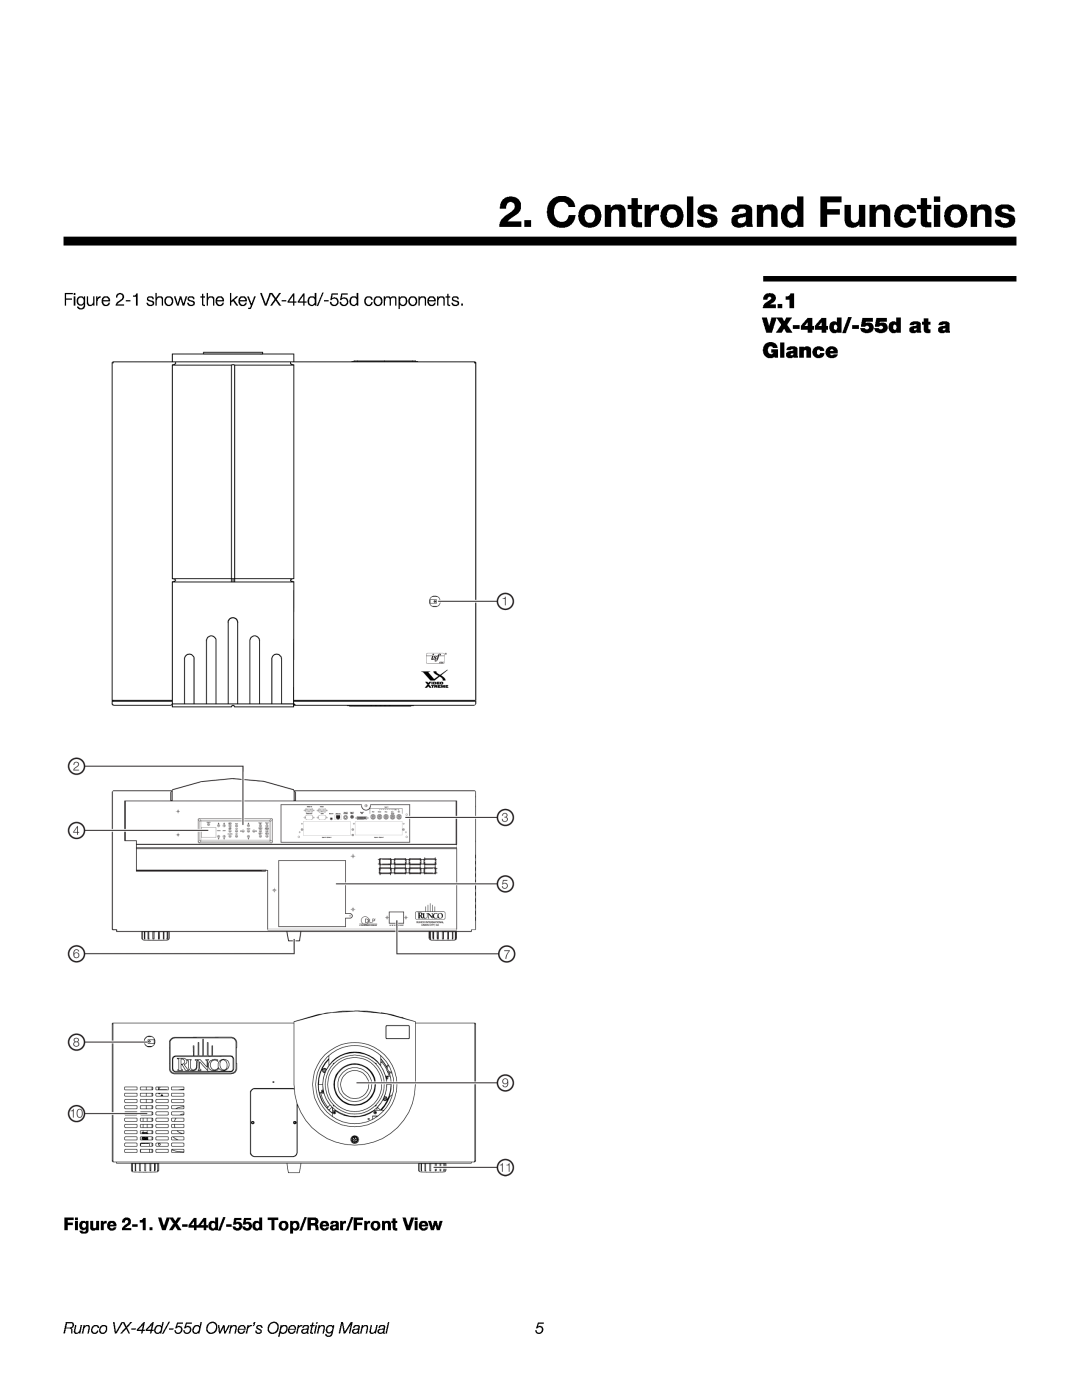 Runco 1080p manual Controls and Functions, 2.1 VX-44d/-55d at a Glance, 1. VX-44d/-55d Top/Rear/Front View 